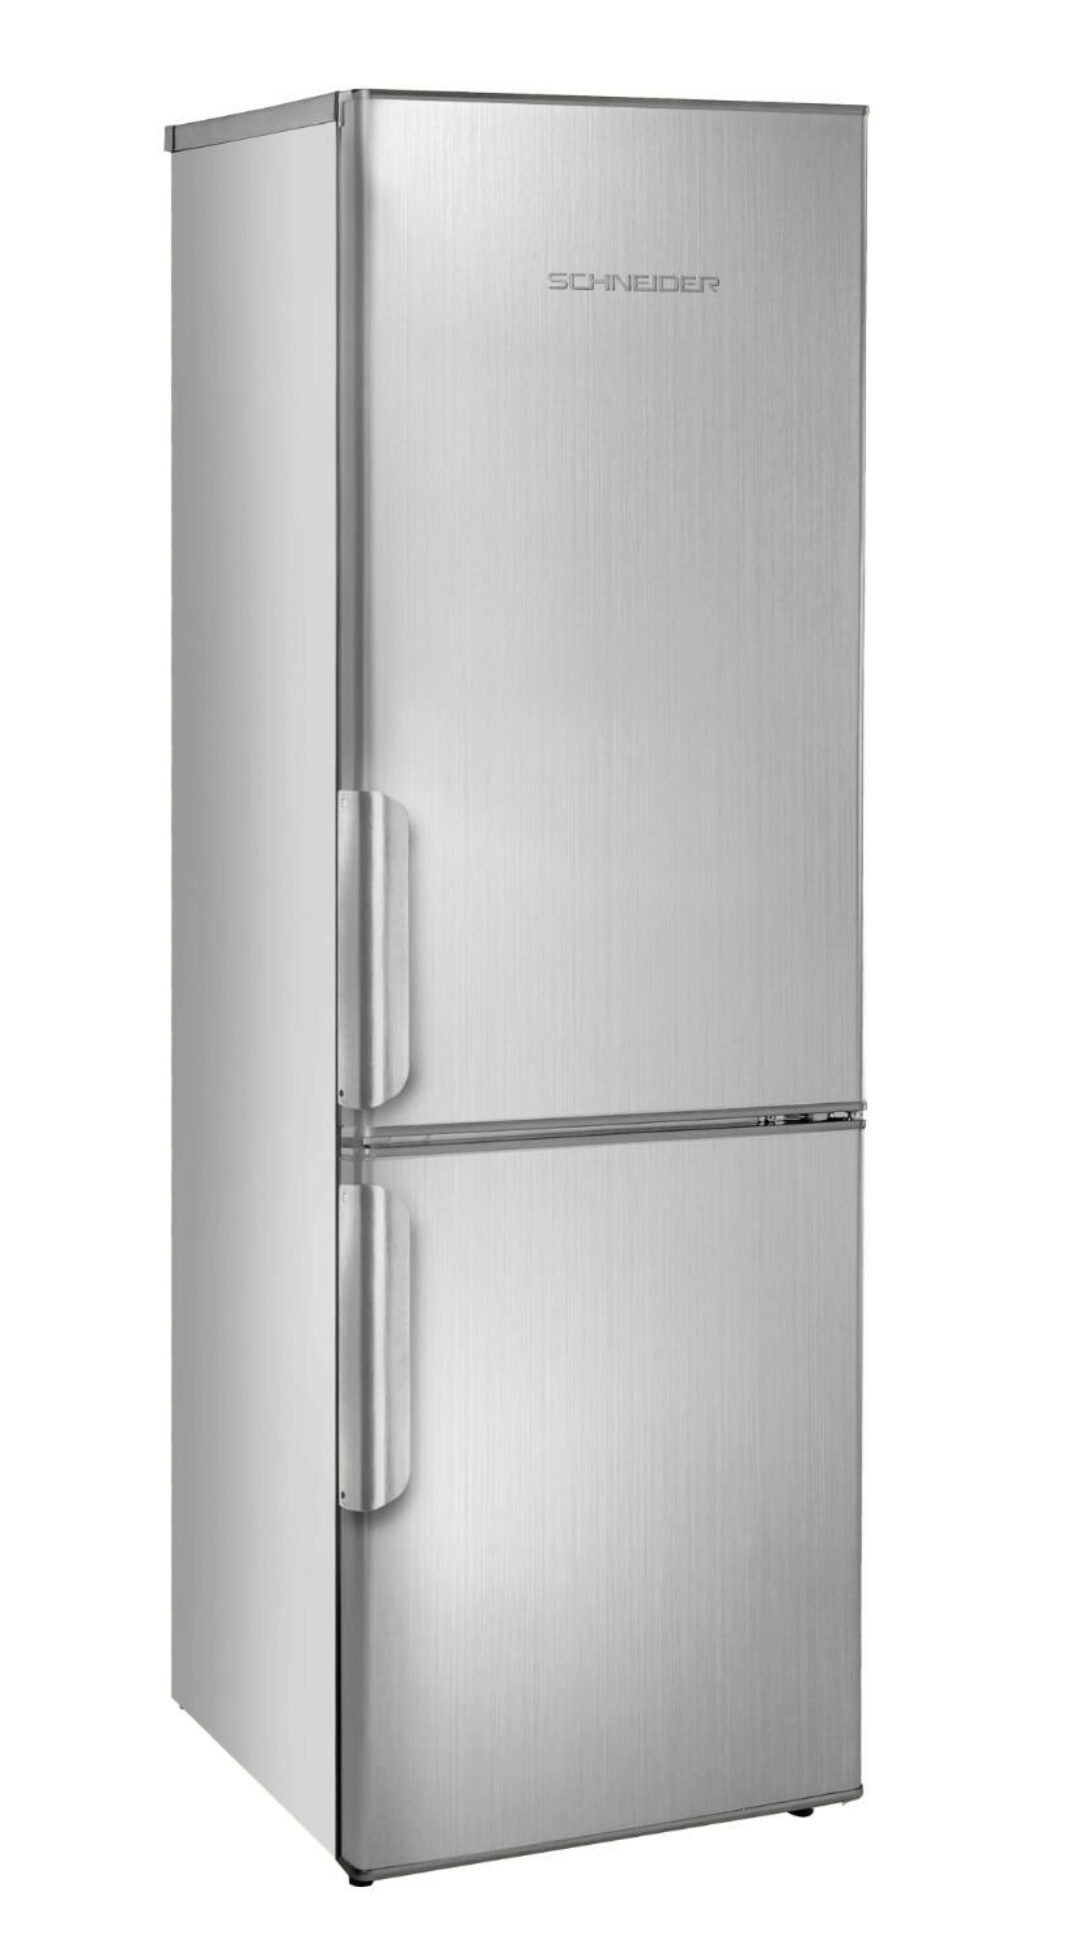 Refrigerator freezer combo black 300 L - Schneider